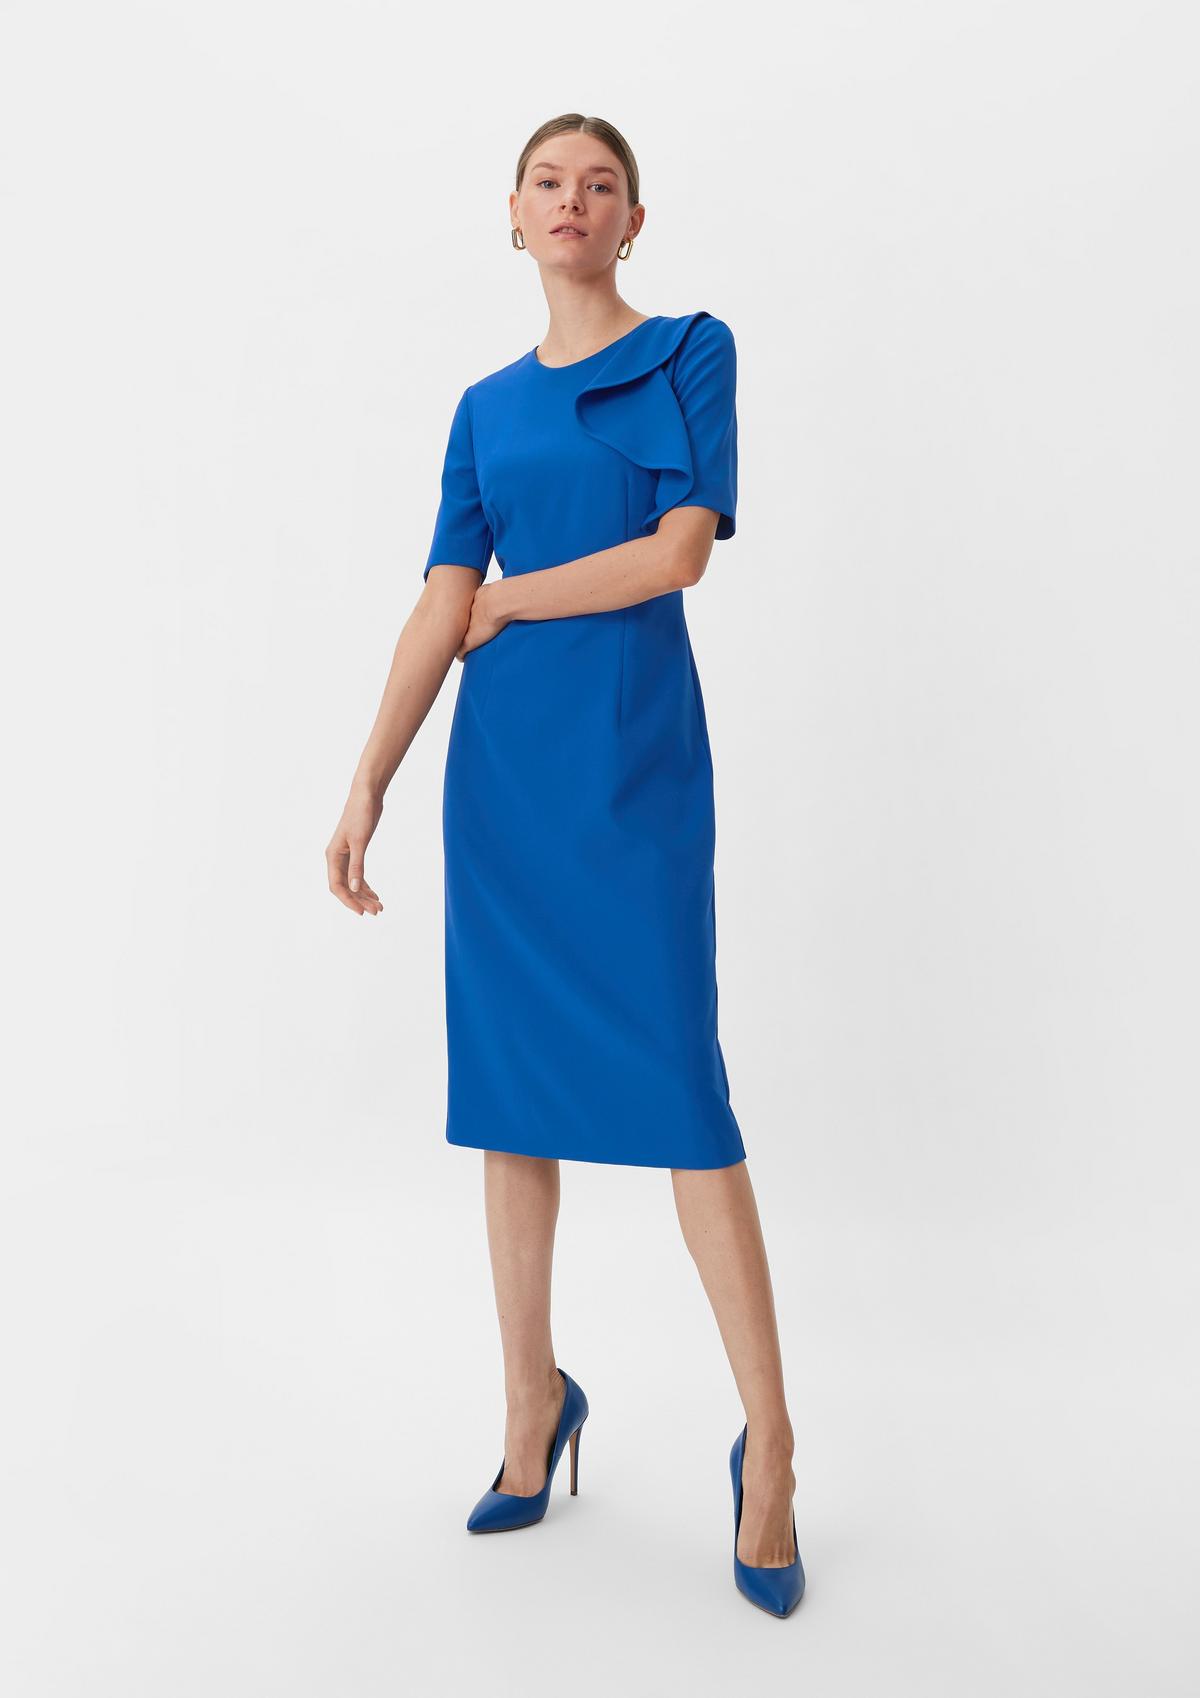 Dress with a flounce detail - royal blue